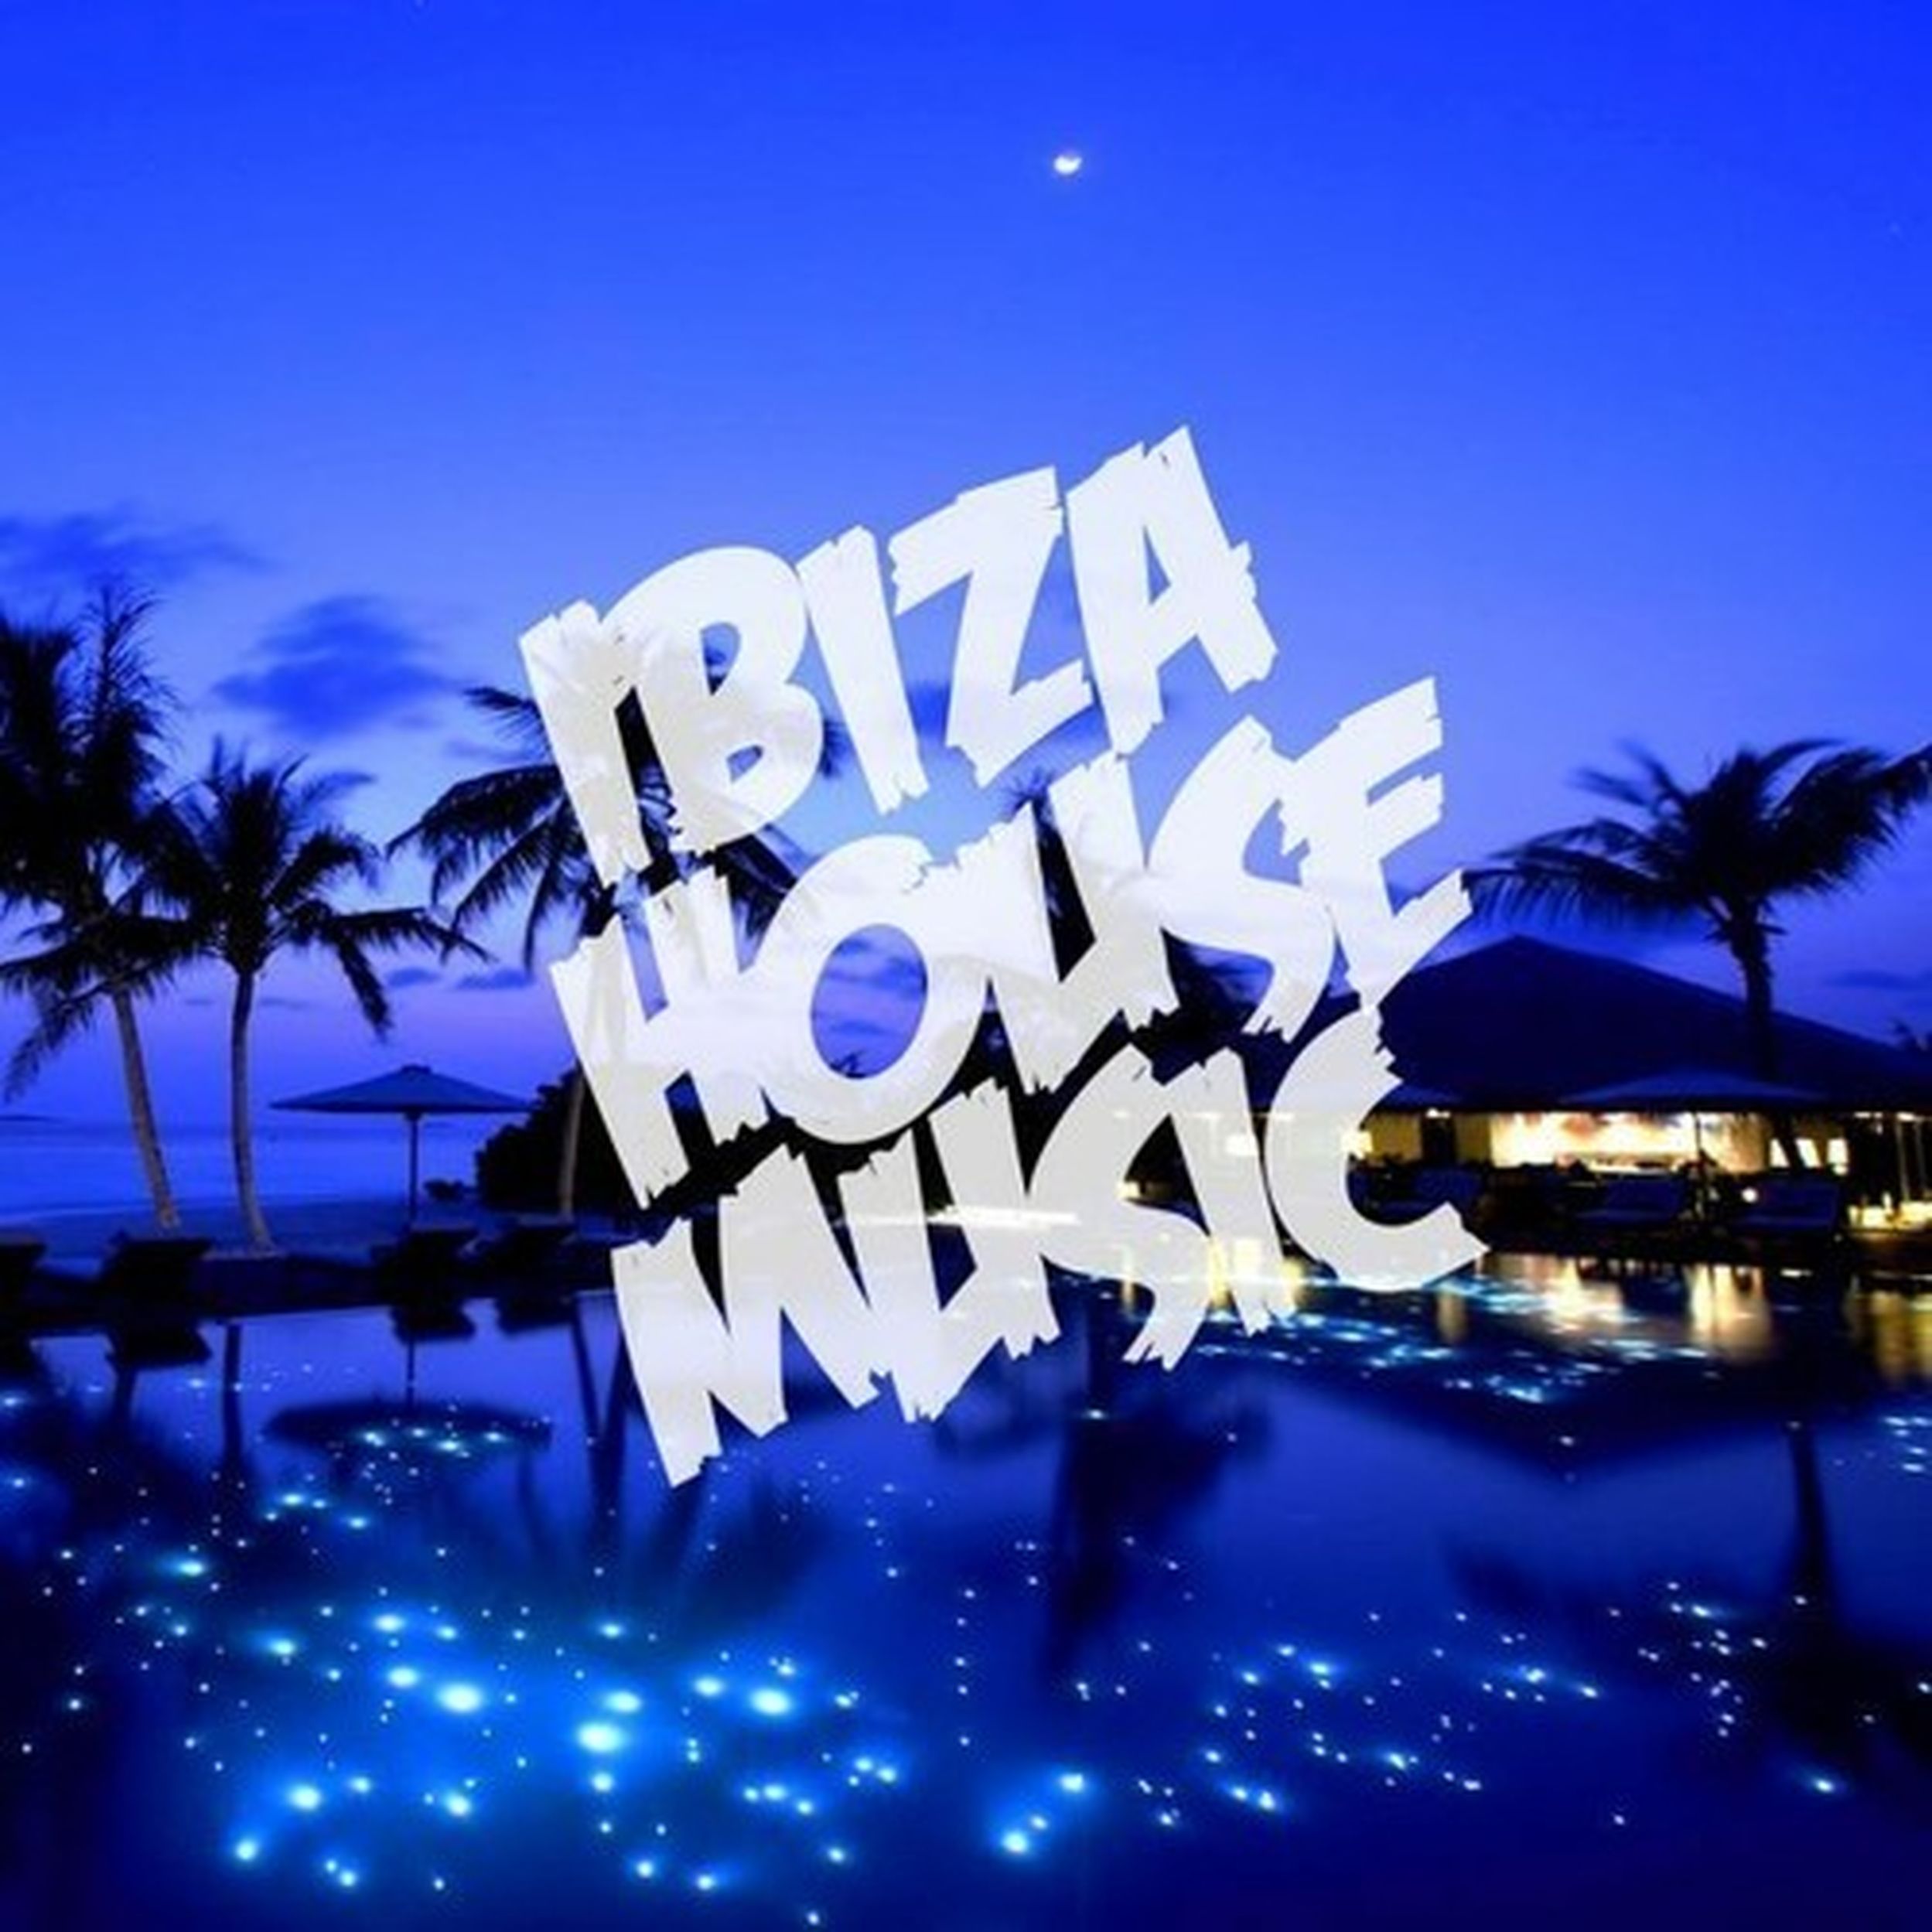 Ибица House Music. Ibiza House. Kelly Holiday. DJ Holiday.